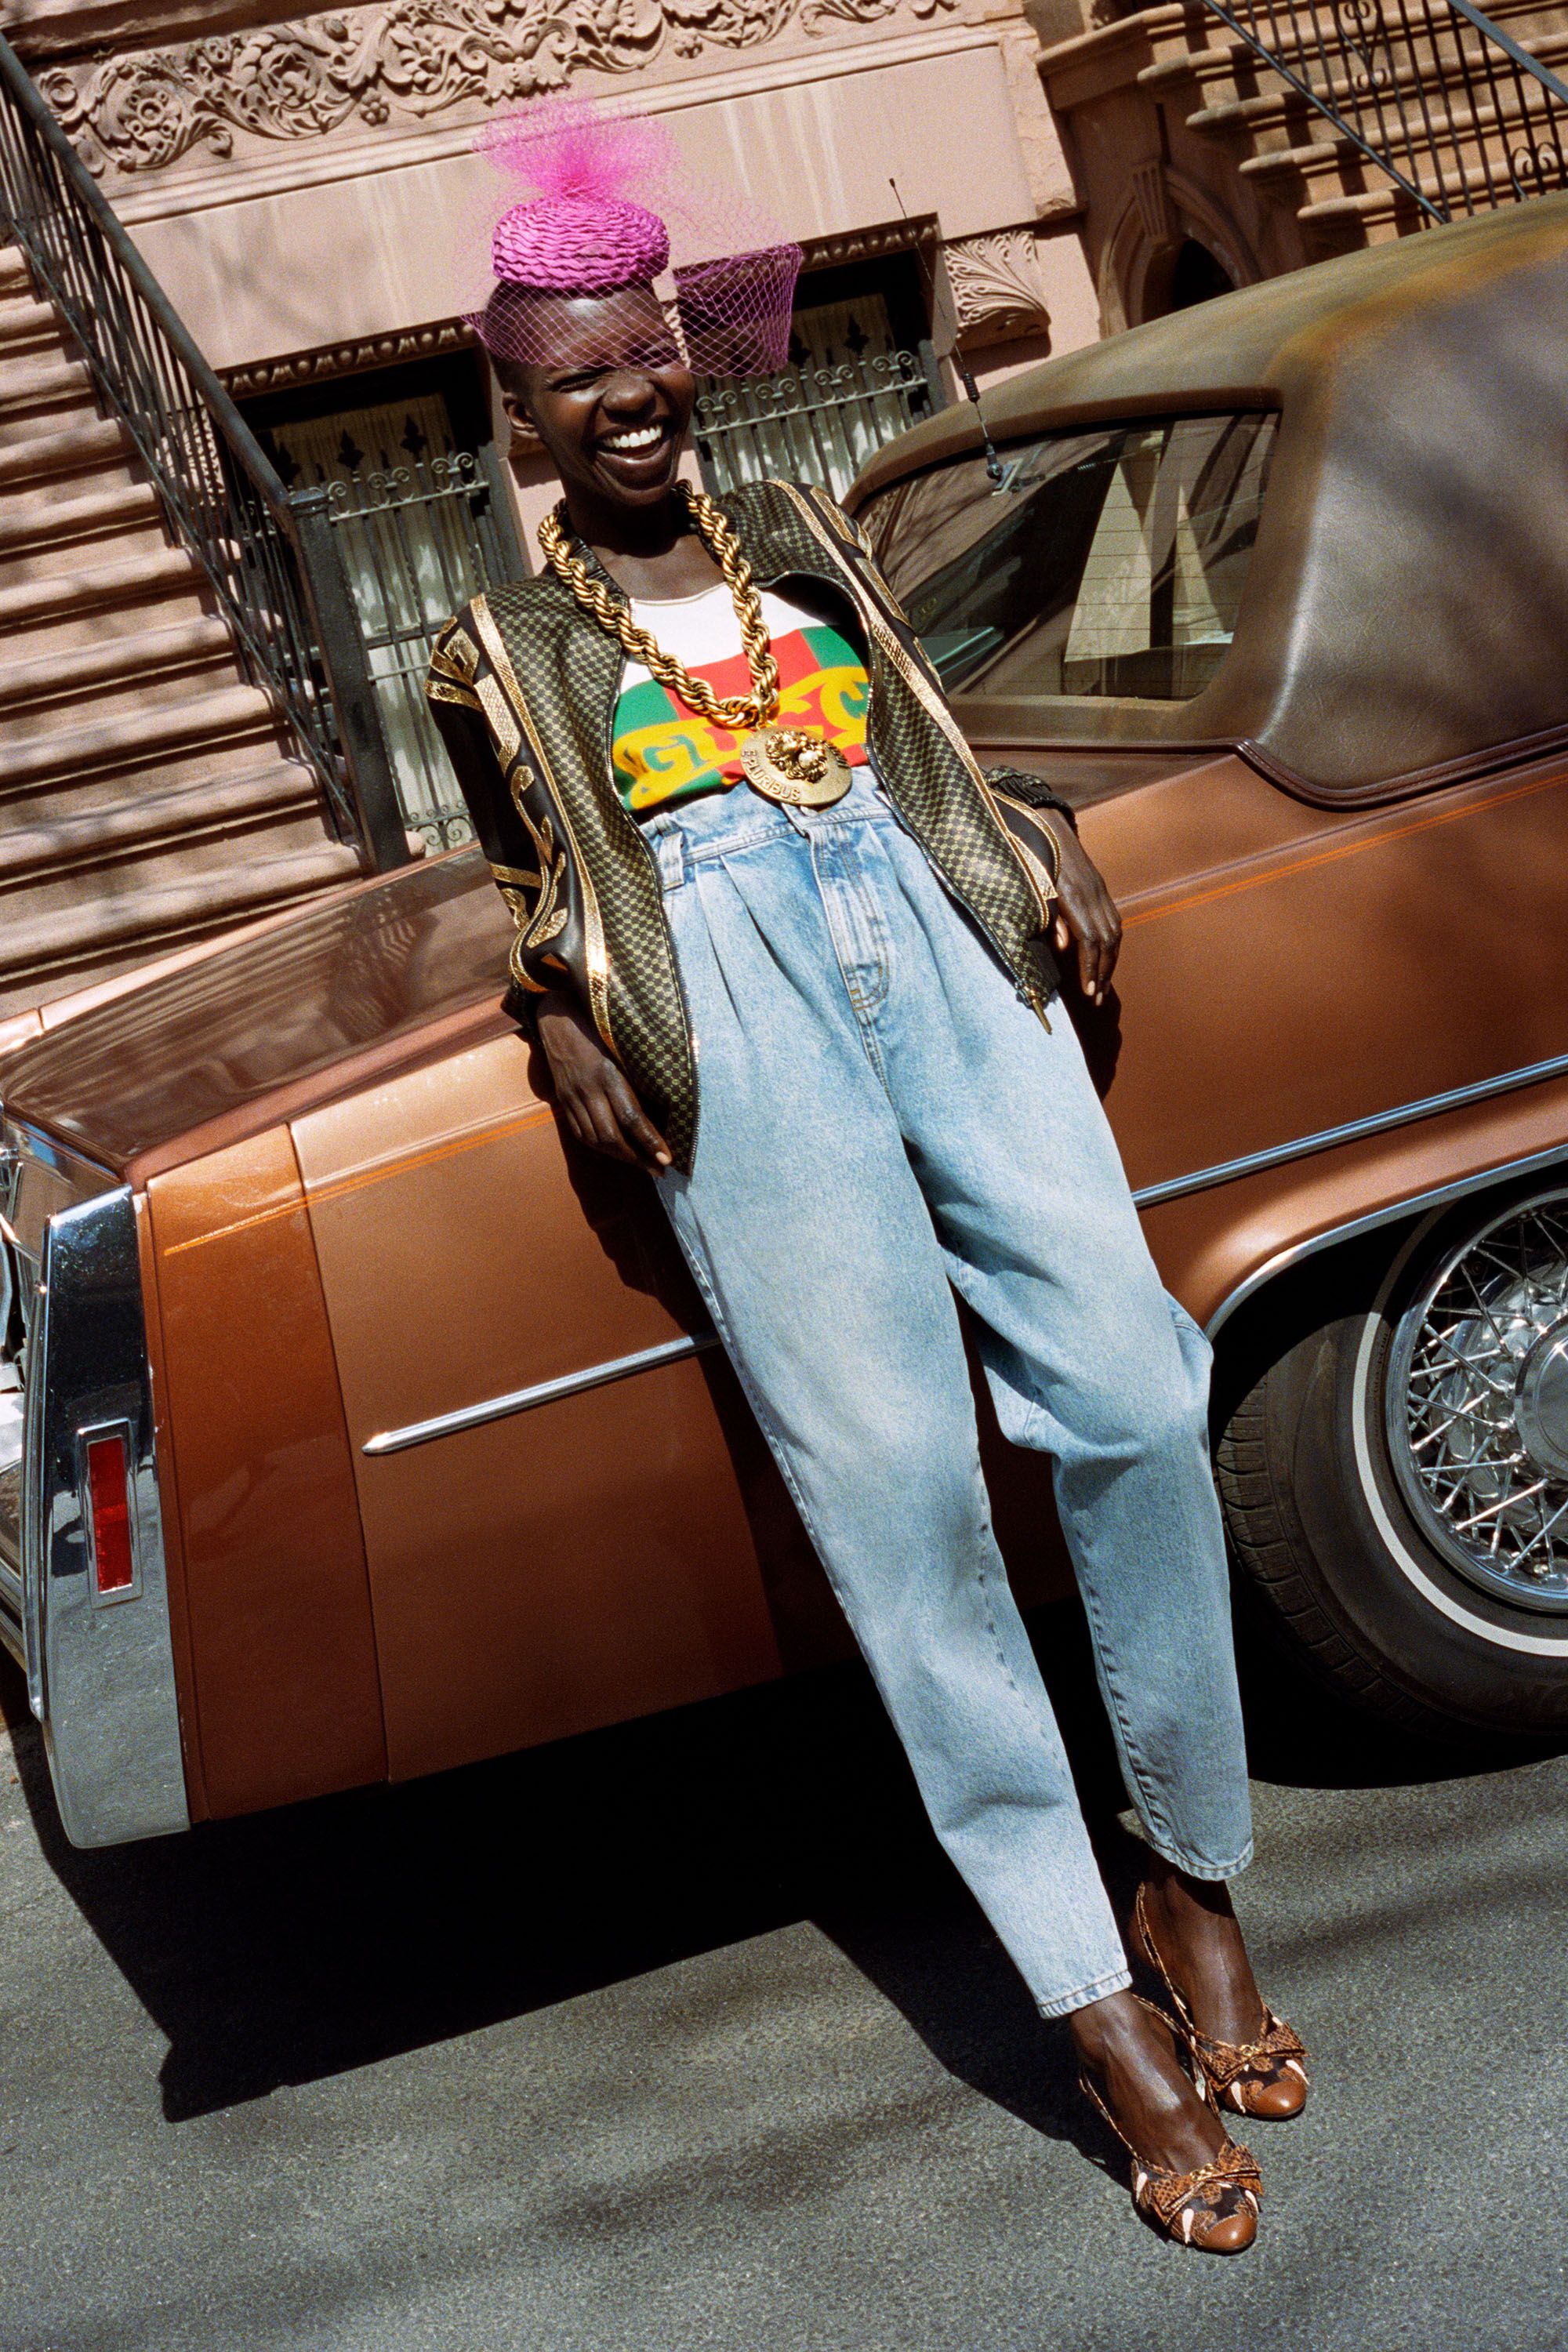 Gucci Launches '90s-Inspired Dapper Dan Collaborative Collection